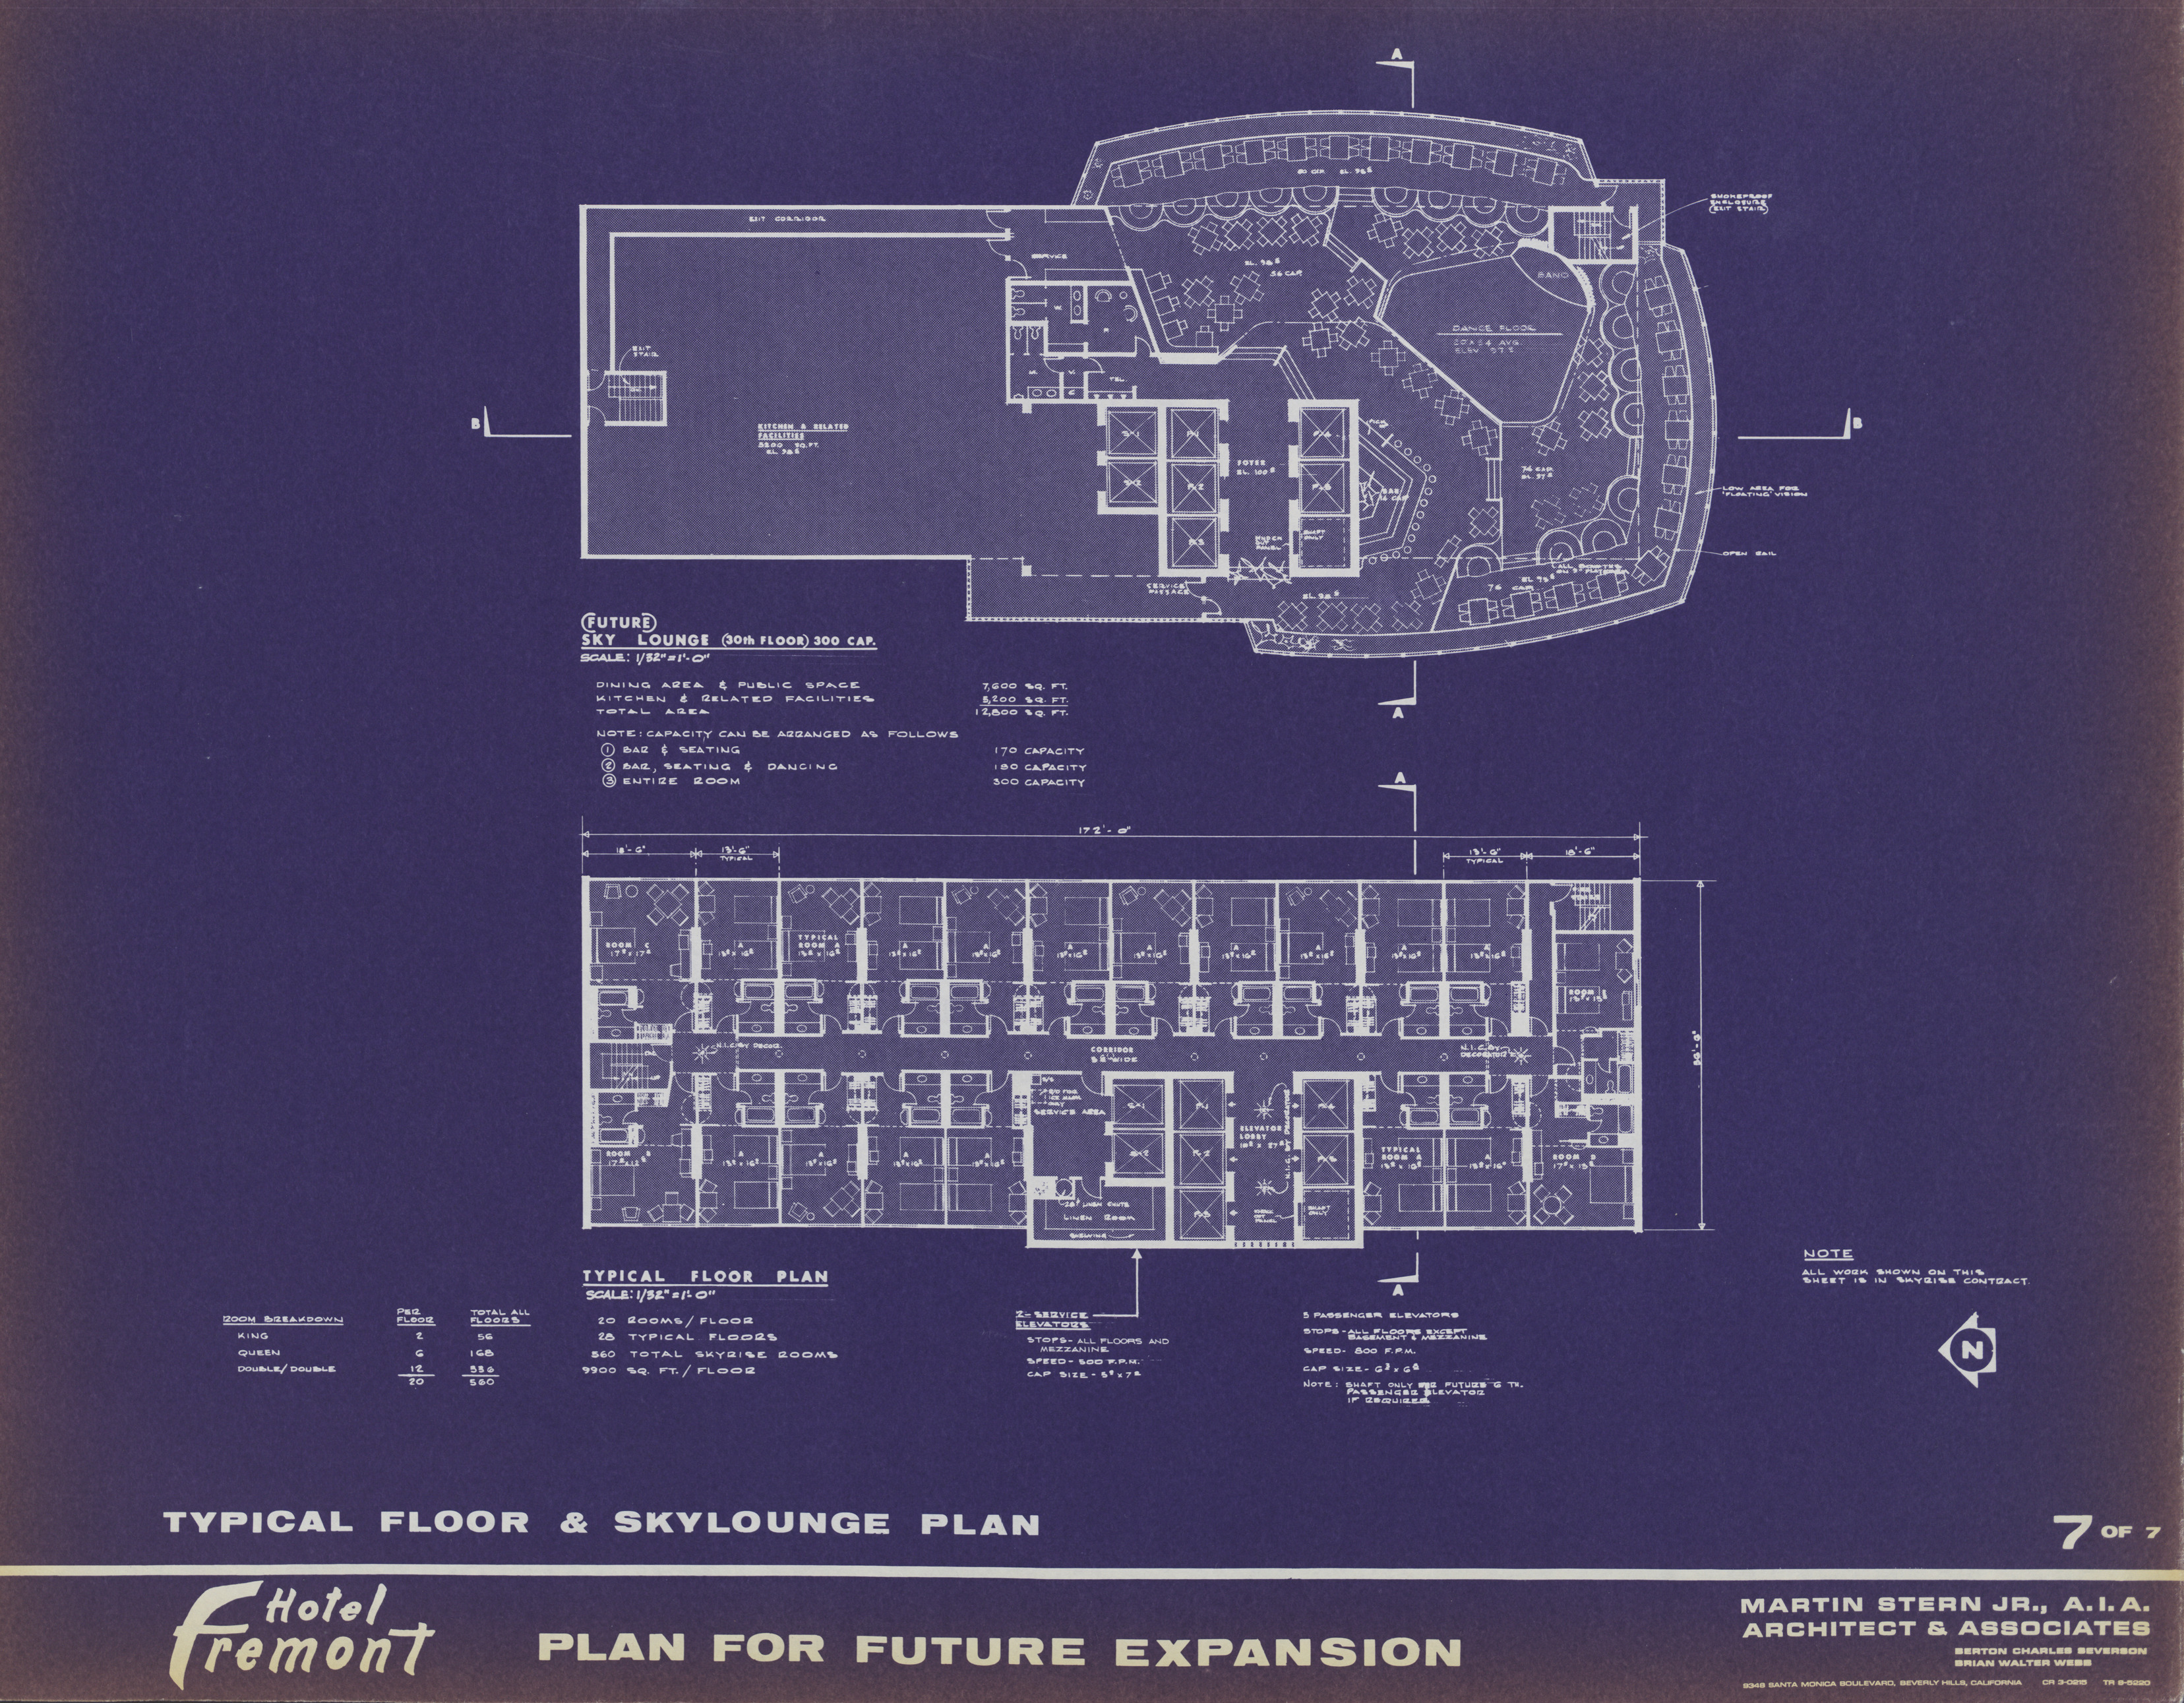 Hotel Fremont Plan for Future Expansion, image 8